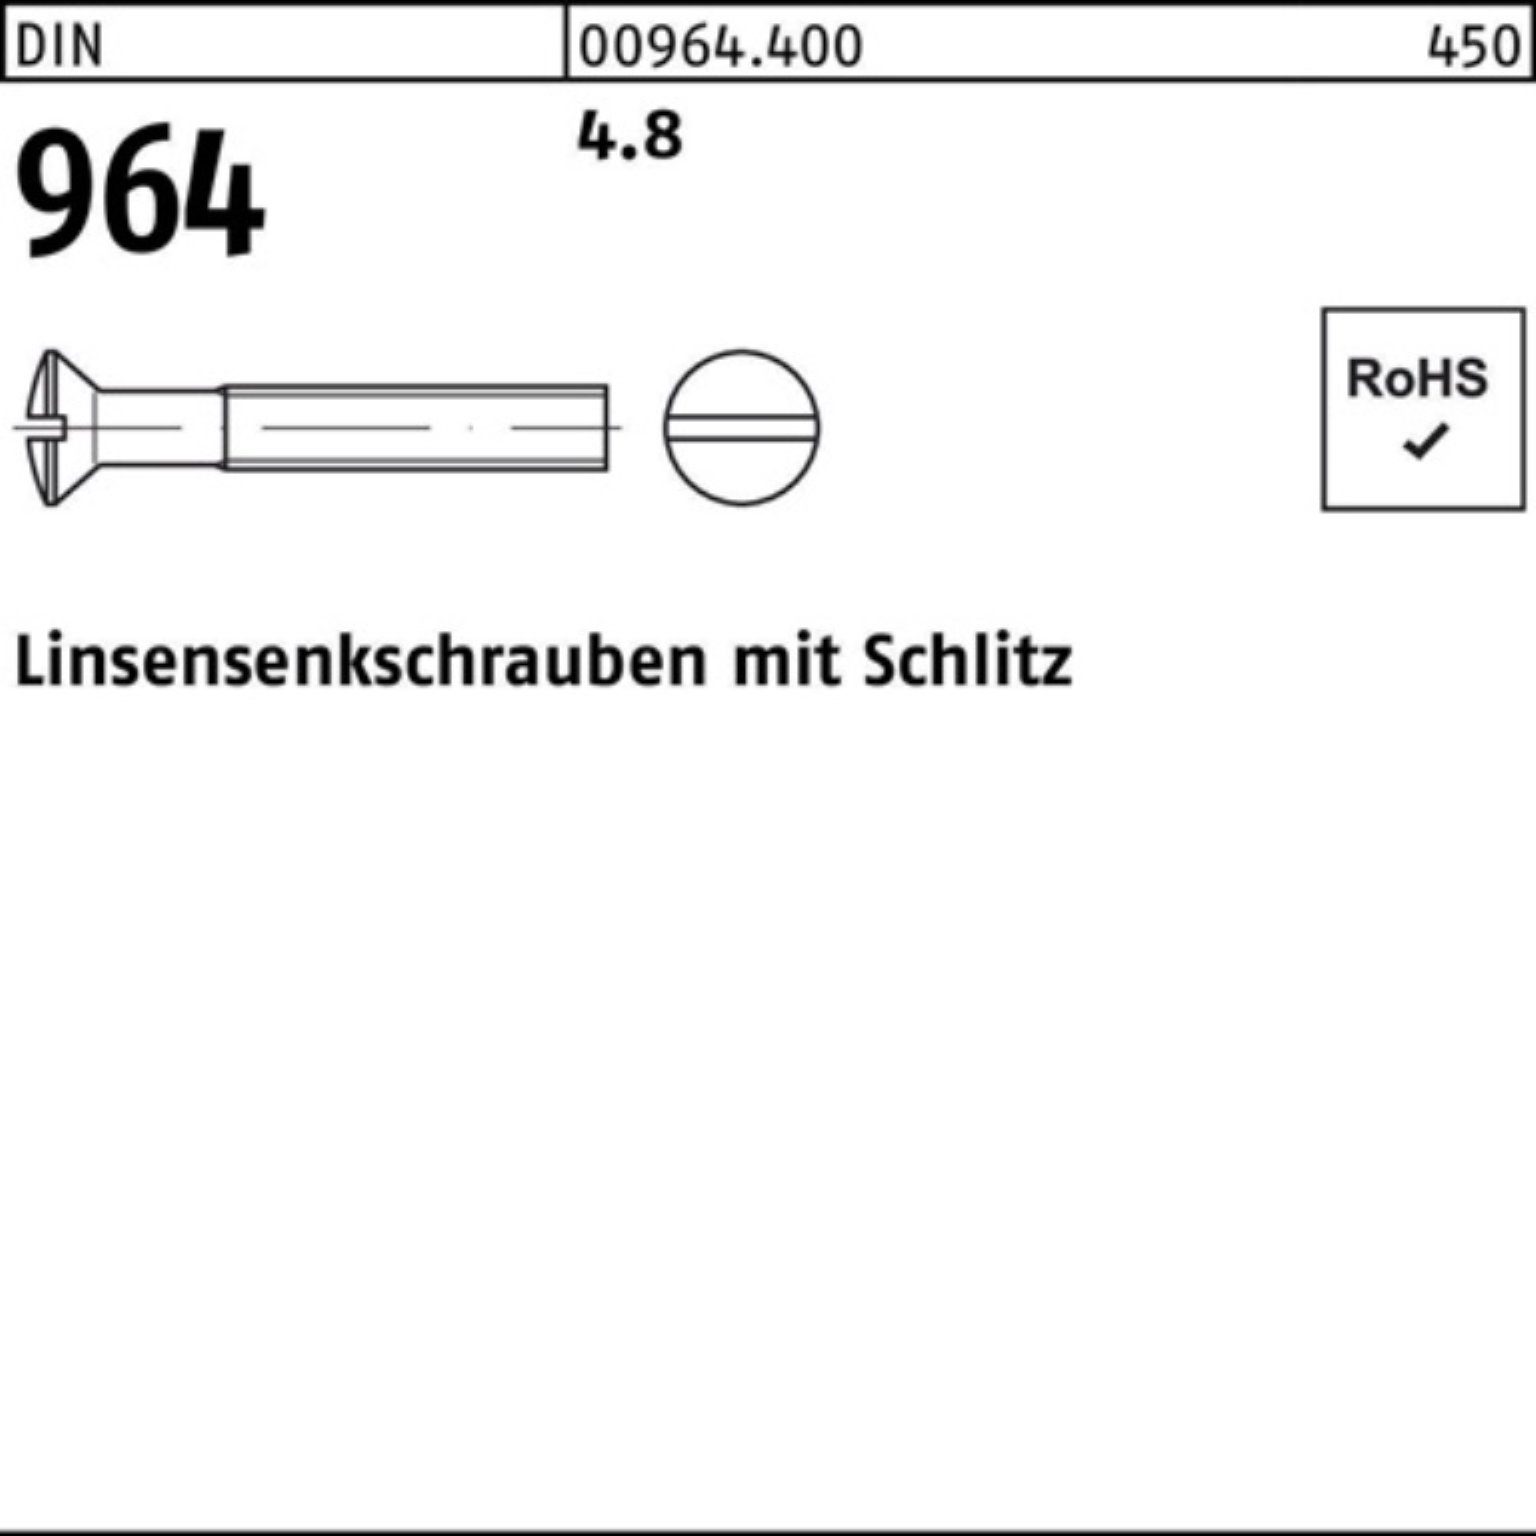 M2,5x Linsenschraube Pack 2000 Linsensenkschraube 964 8 4.8 2000er Stück Reyher Schlitz DIN